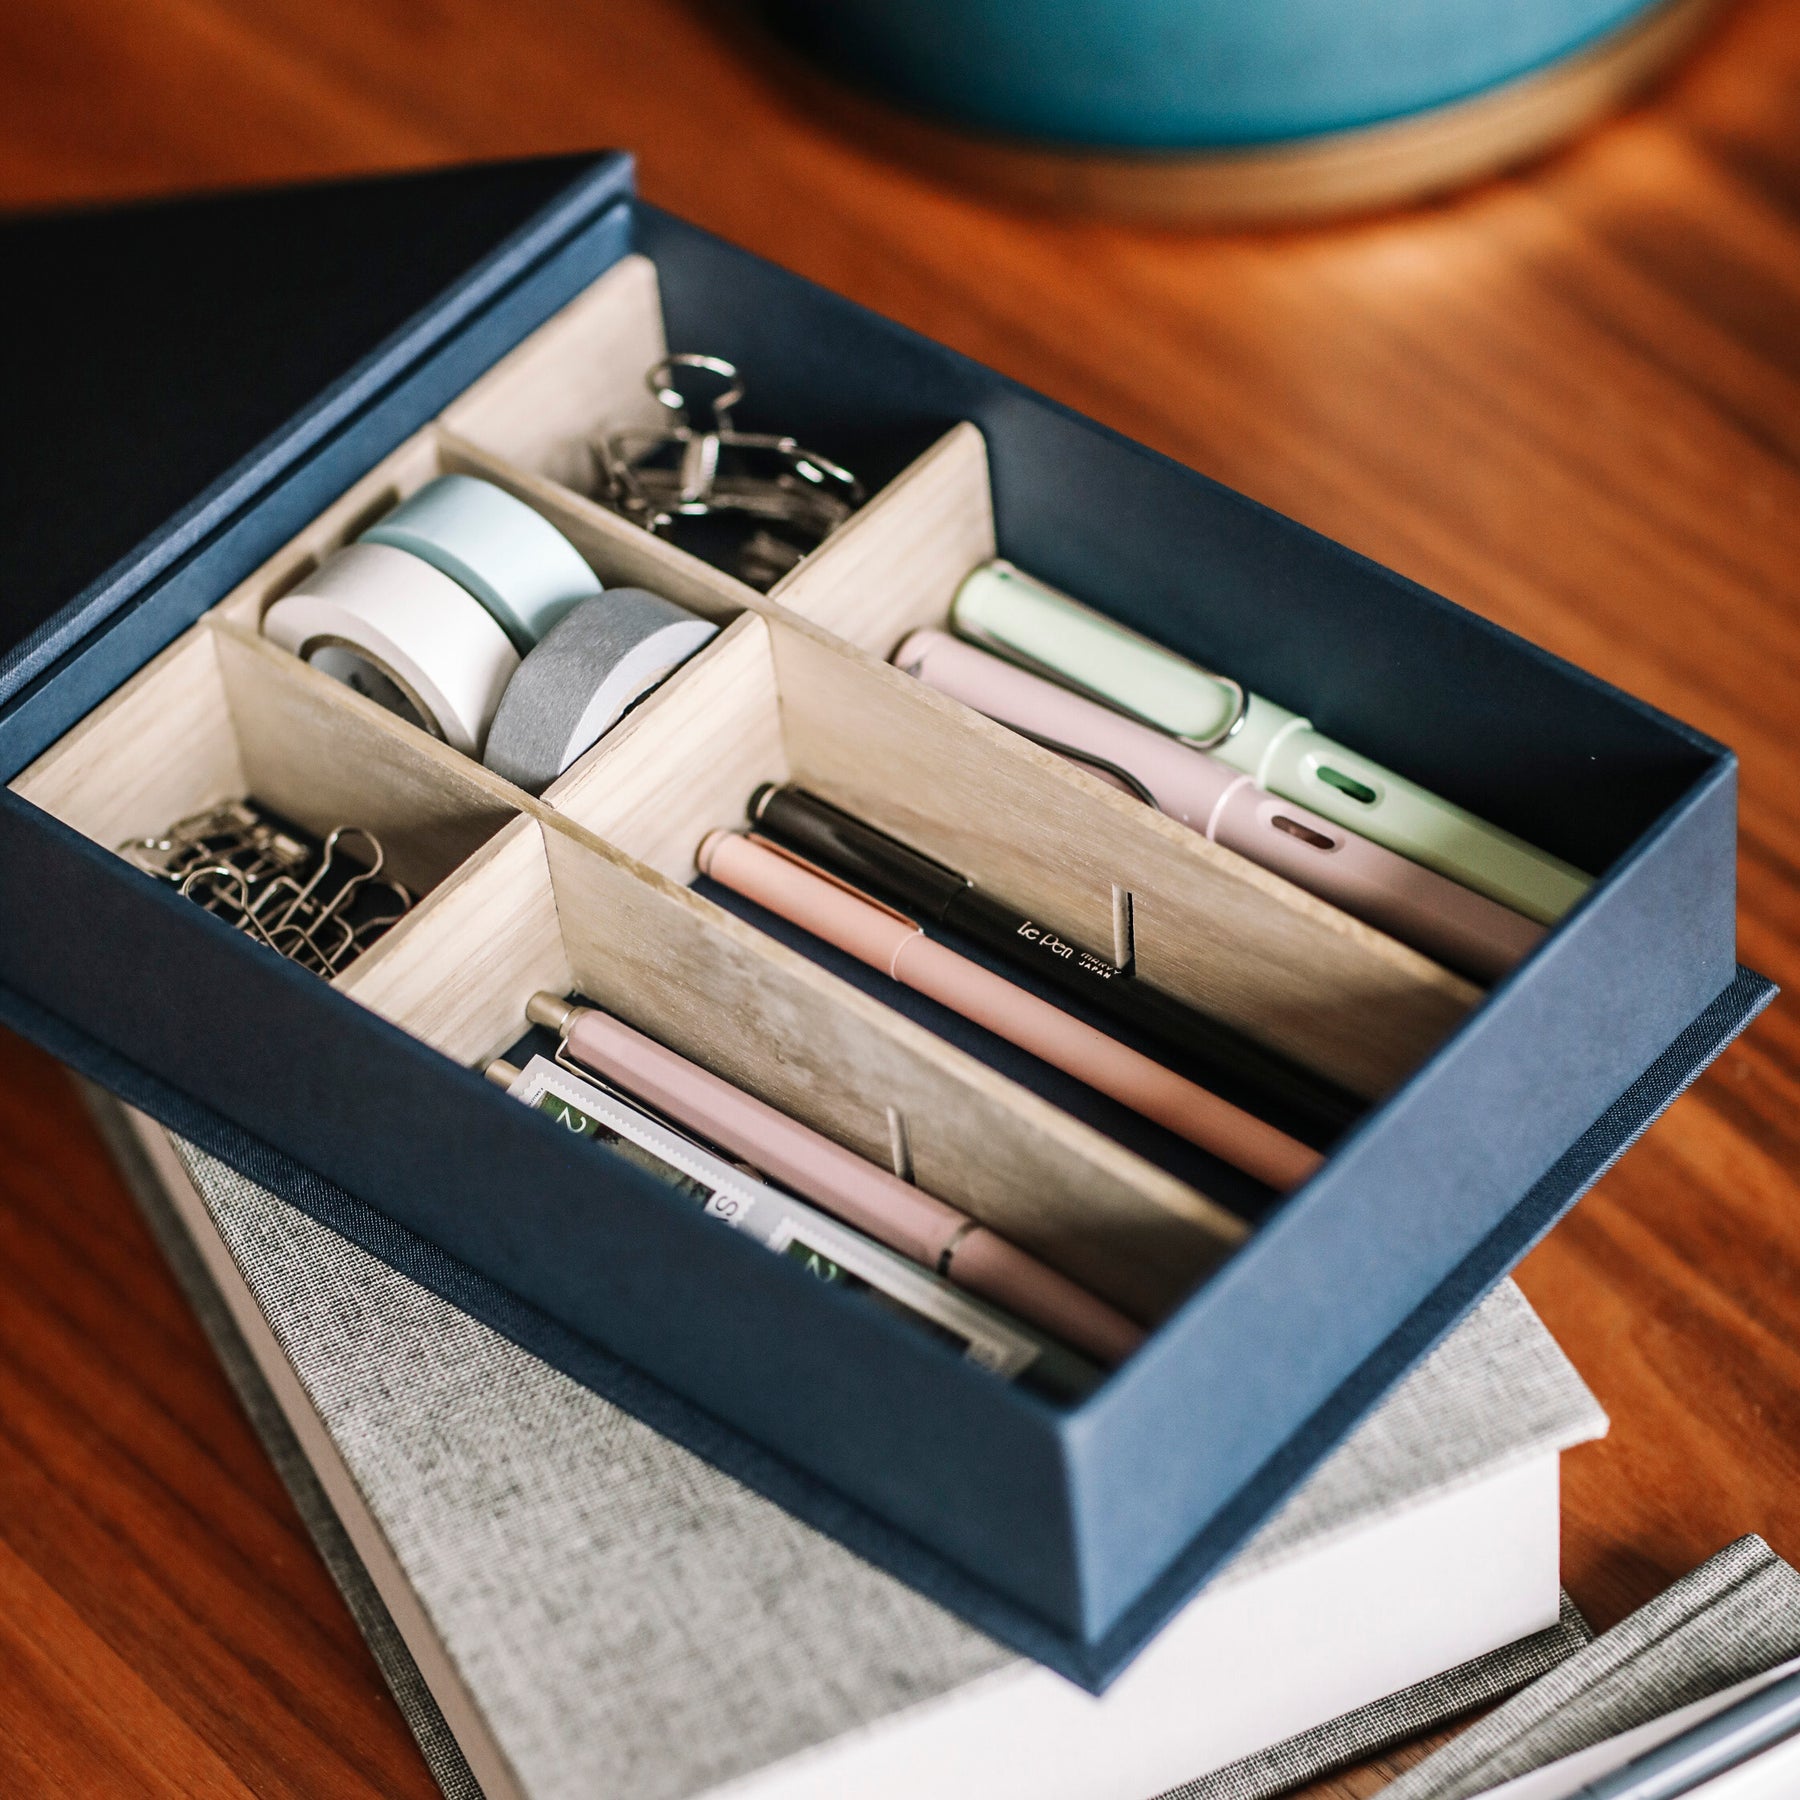 Bookbinders Design - Box - A4 - Light Grey